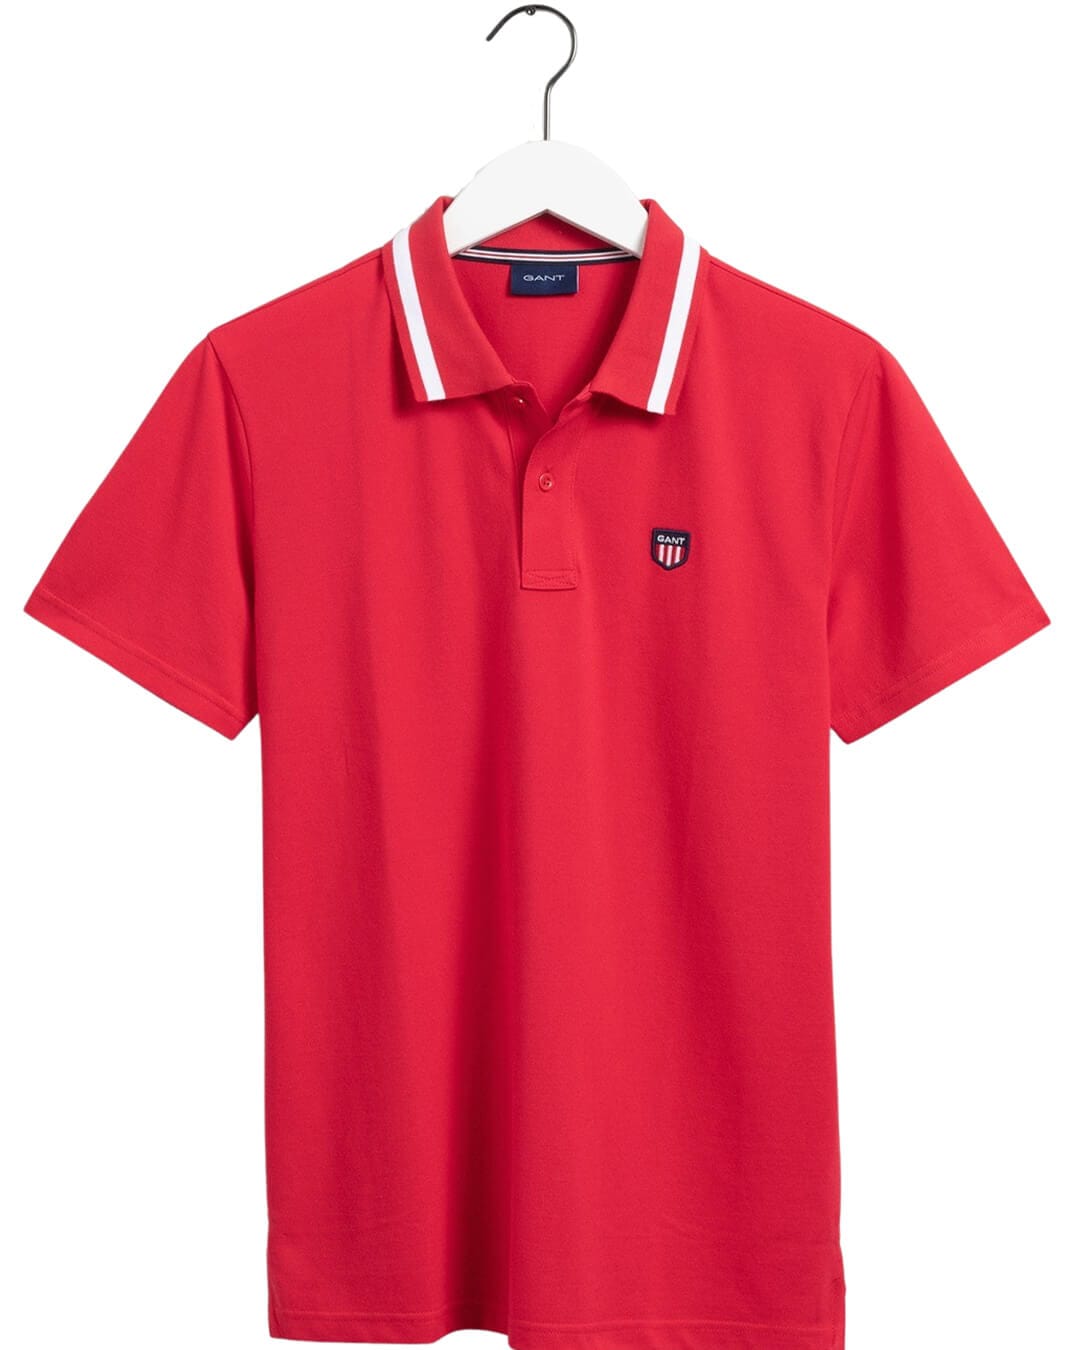 Gant Polo Shirts Gant Retro Shield Piqué Bright Red Polo Shirt